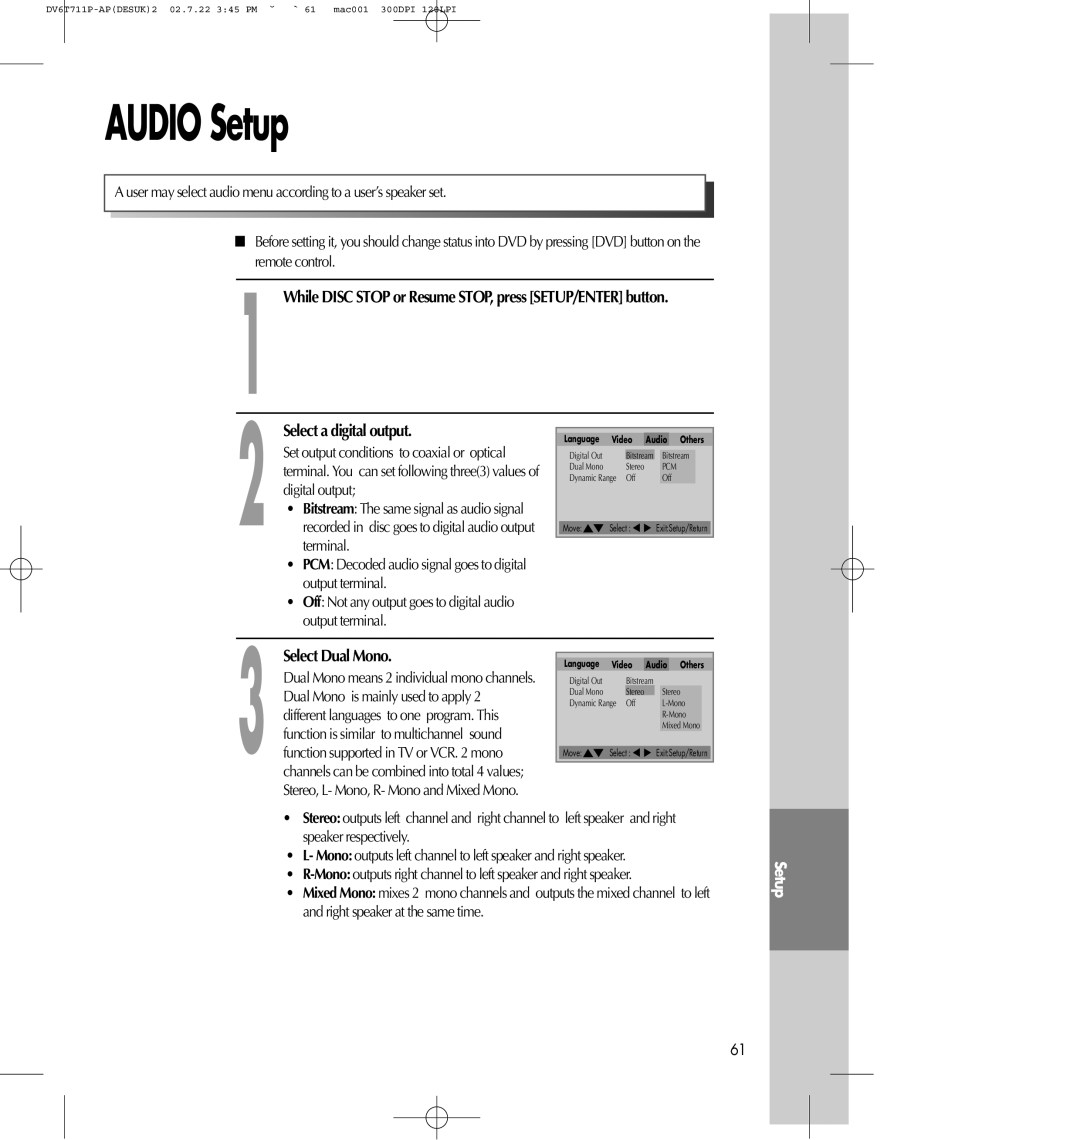 Daewoo SD-8100P, SD-2100P AUDIO Setup, While DISC STOP or Resume STOP, press SETUP/ENTER button, Select a digital output 